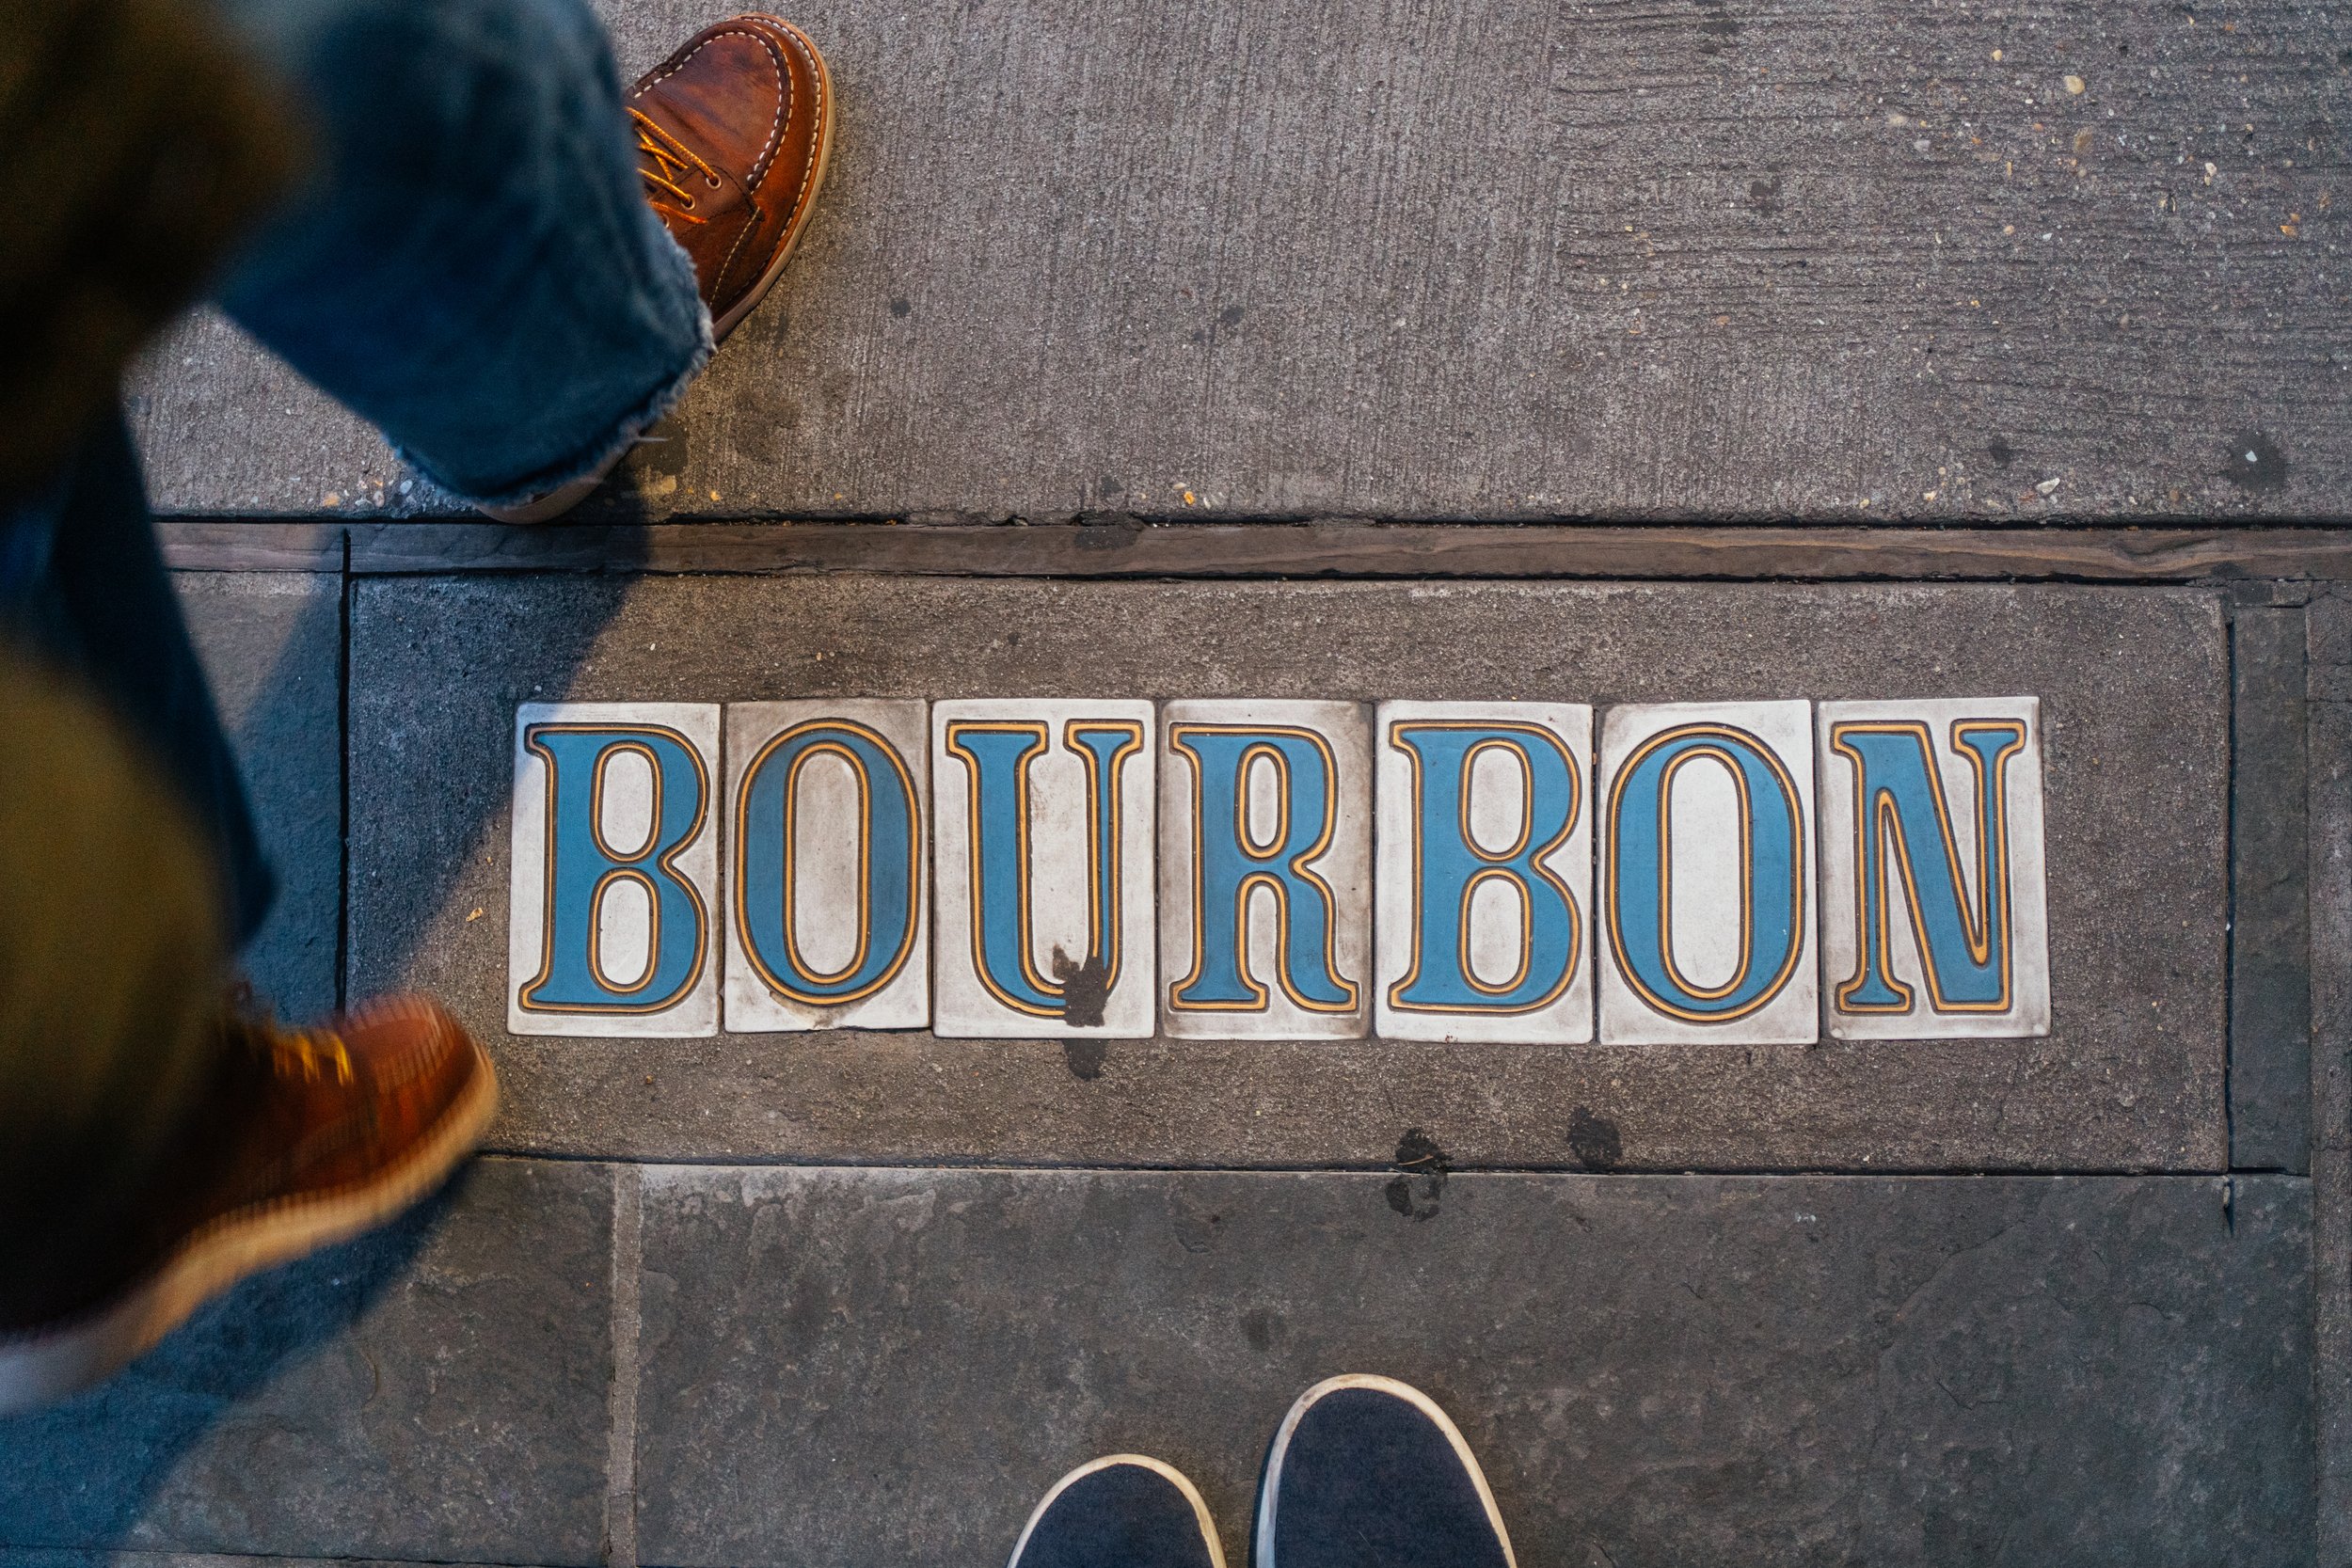 Bourbon street in New Orleans, Louisiana